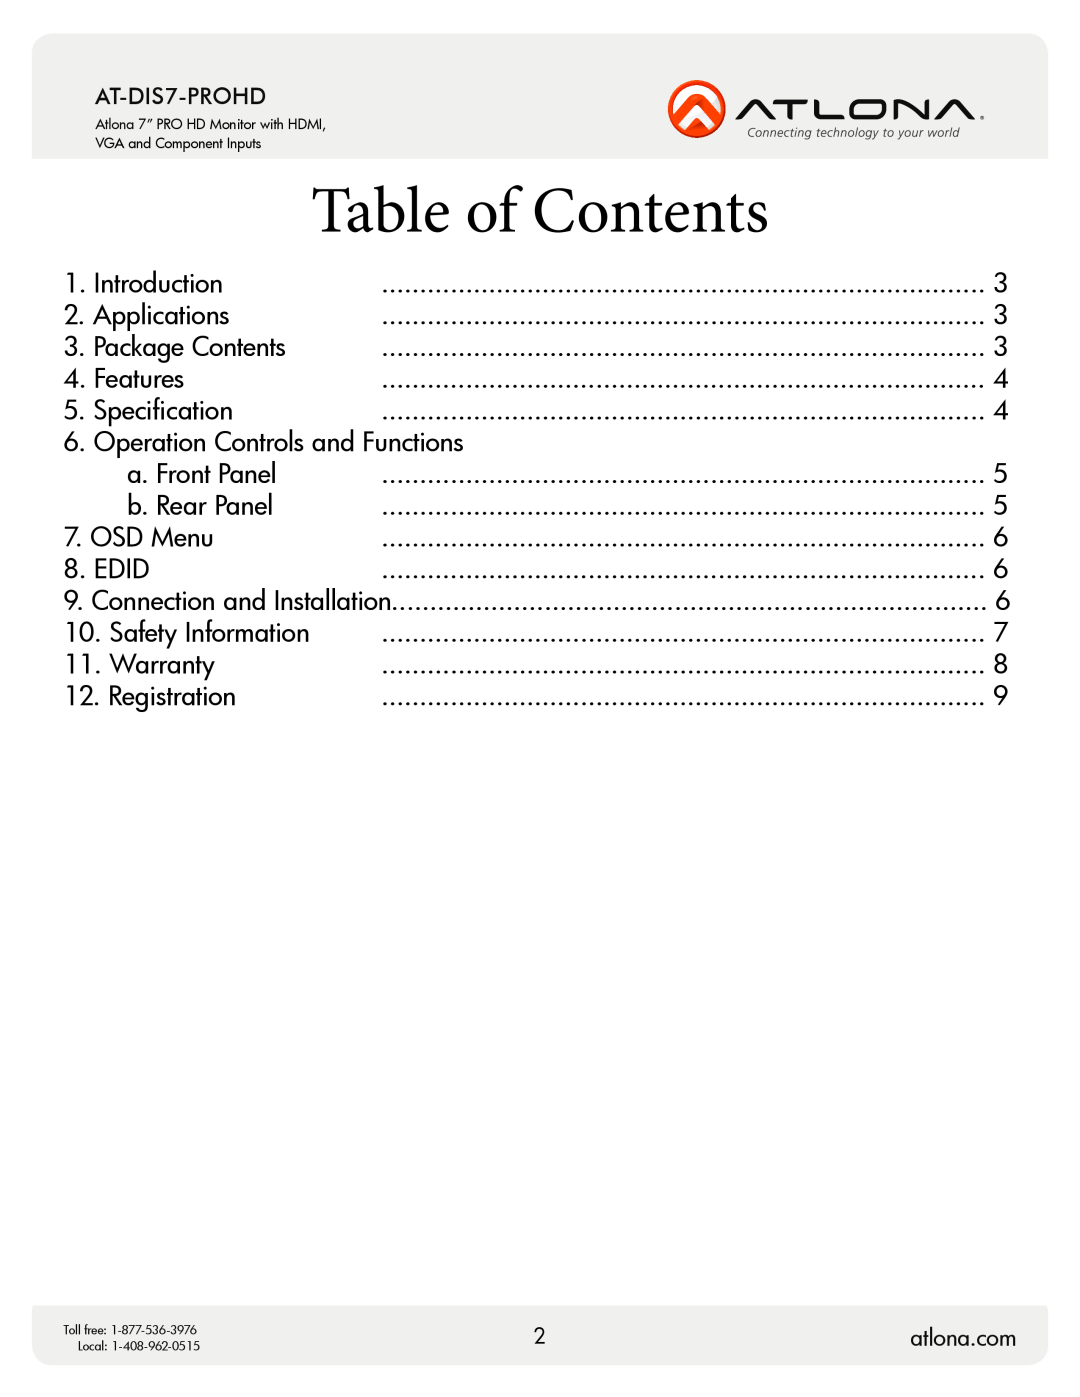 Atlona AT-DIS7-PROHD user manual Table of Contents 